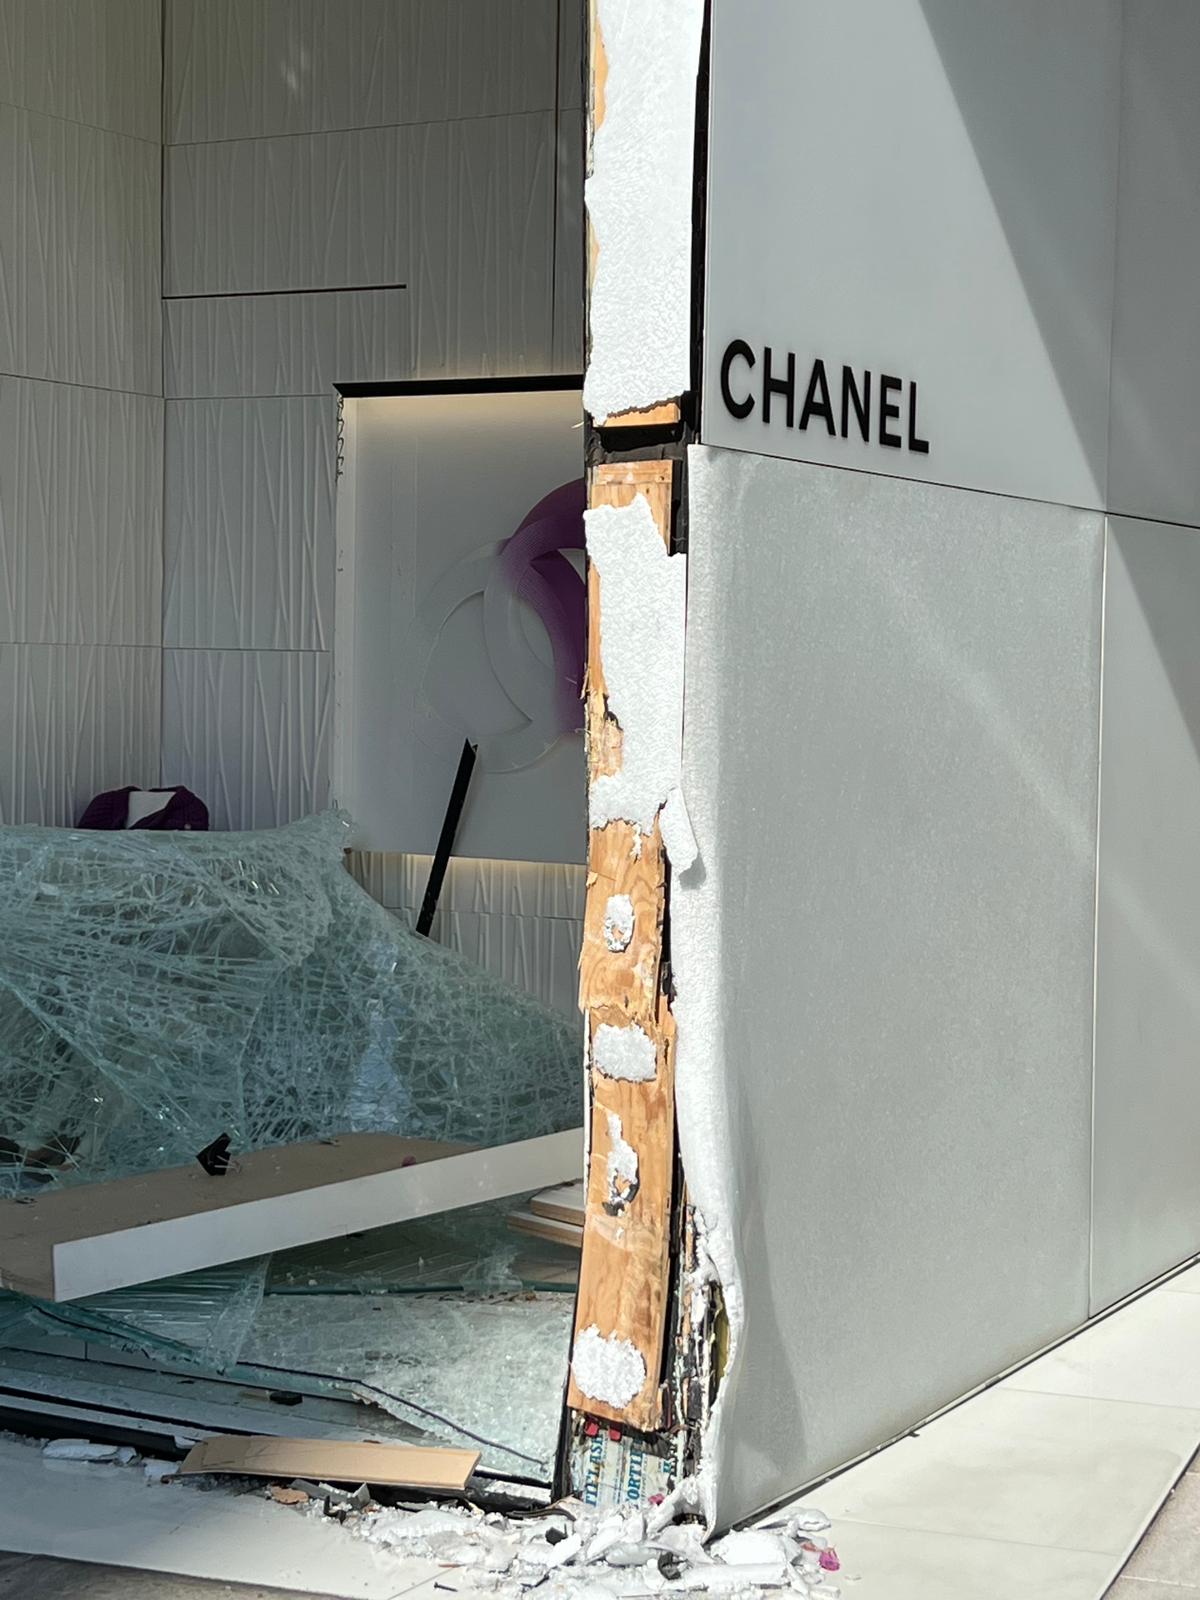 Burglars Swarm Chanel Storefront in Beverly Grove – NBC Los Angeles